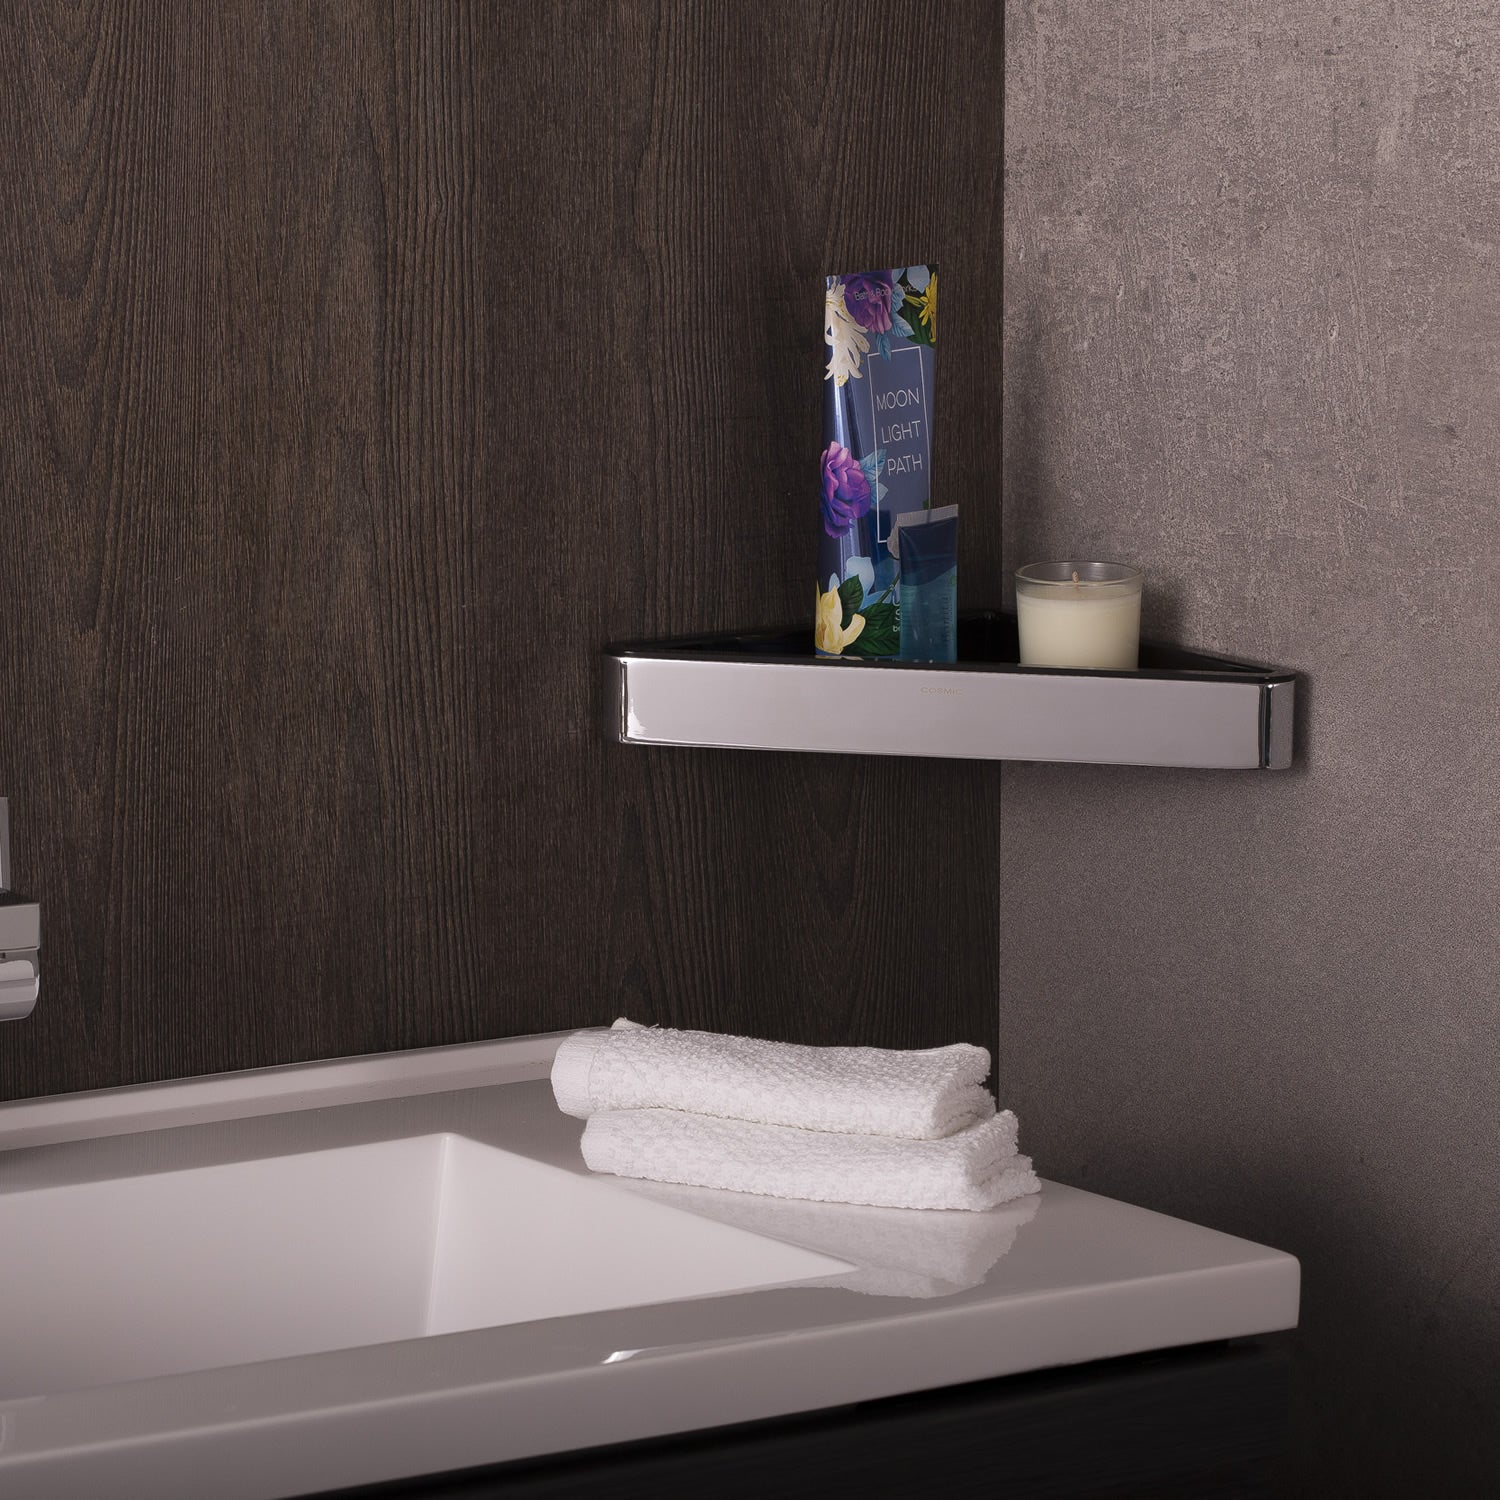 COSMIC Extreme Corner Bathroom Shelf, Wall Mount, Plastic, Chrome - Matte Black Finish, 8-3/4 x 1-9/16 x 8-3/4 Inches (2516150)